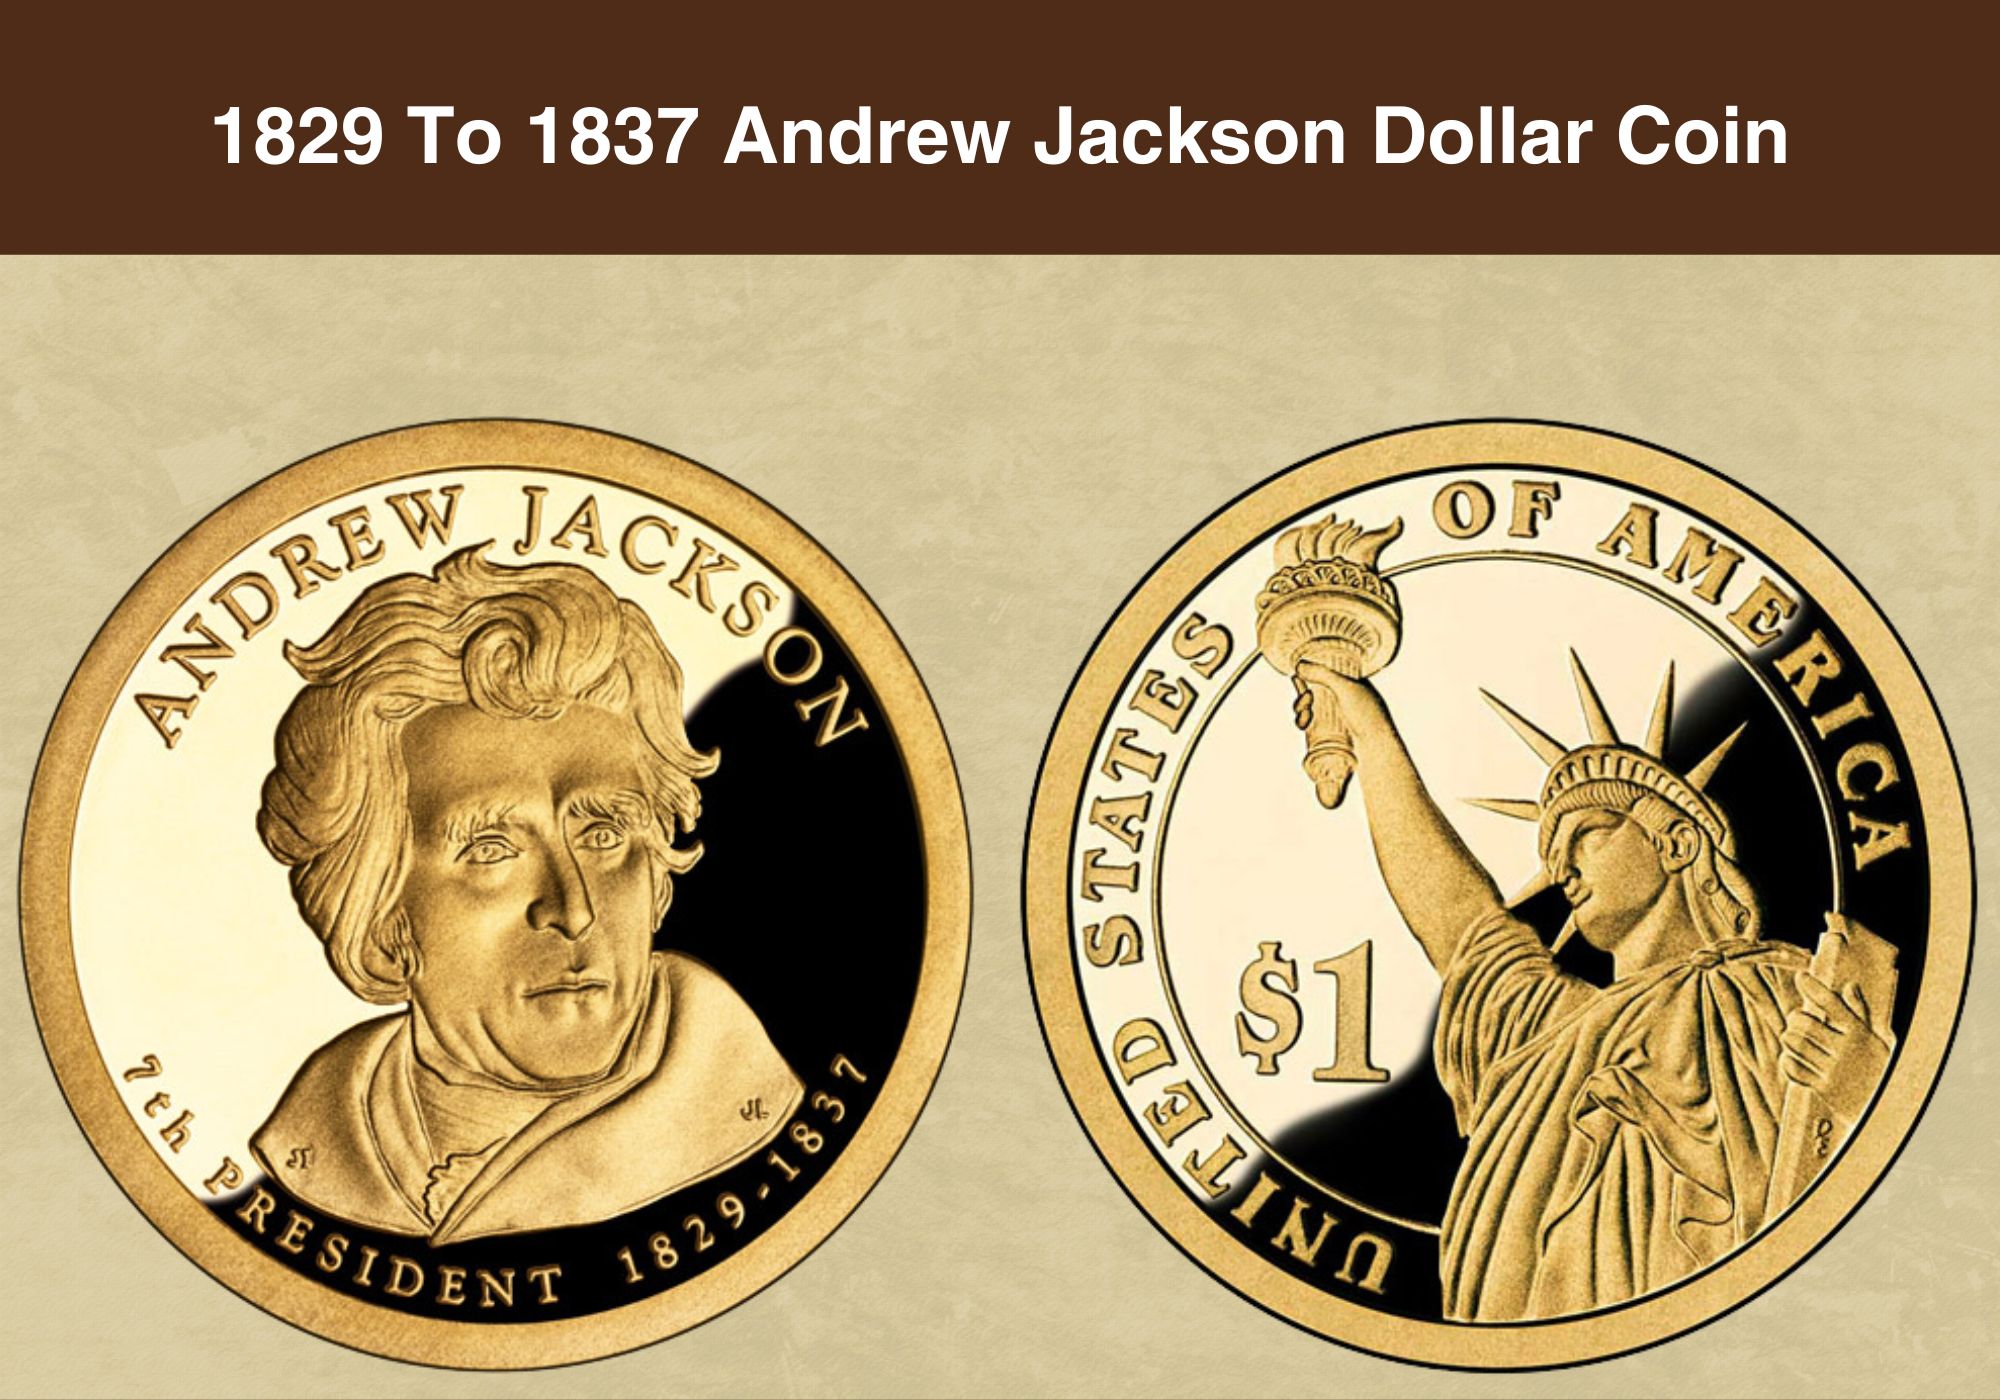 1 dollar 2011 - Andrew Johnson (1865-1869), USA - Coin value